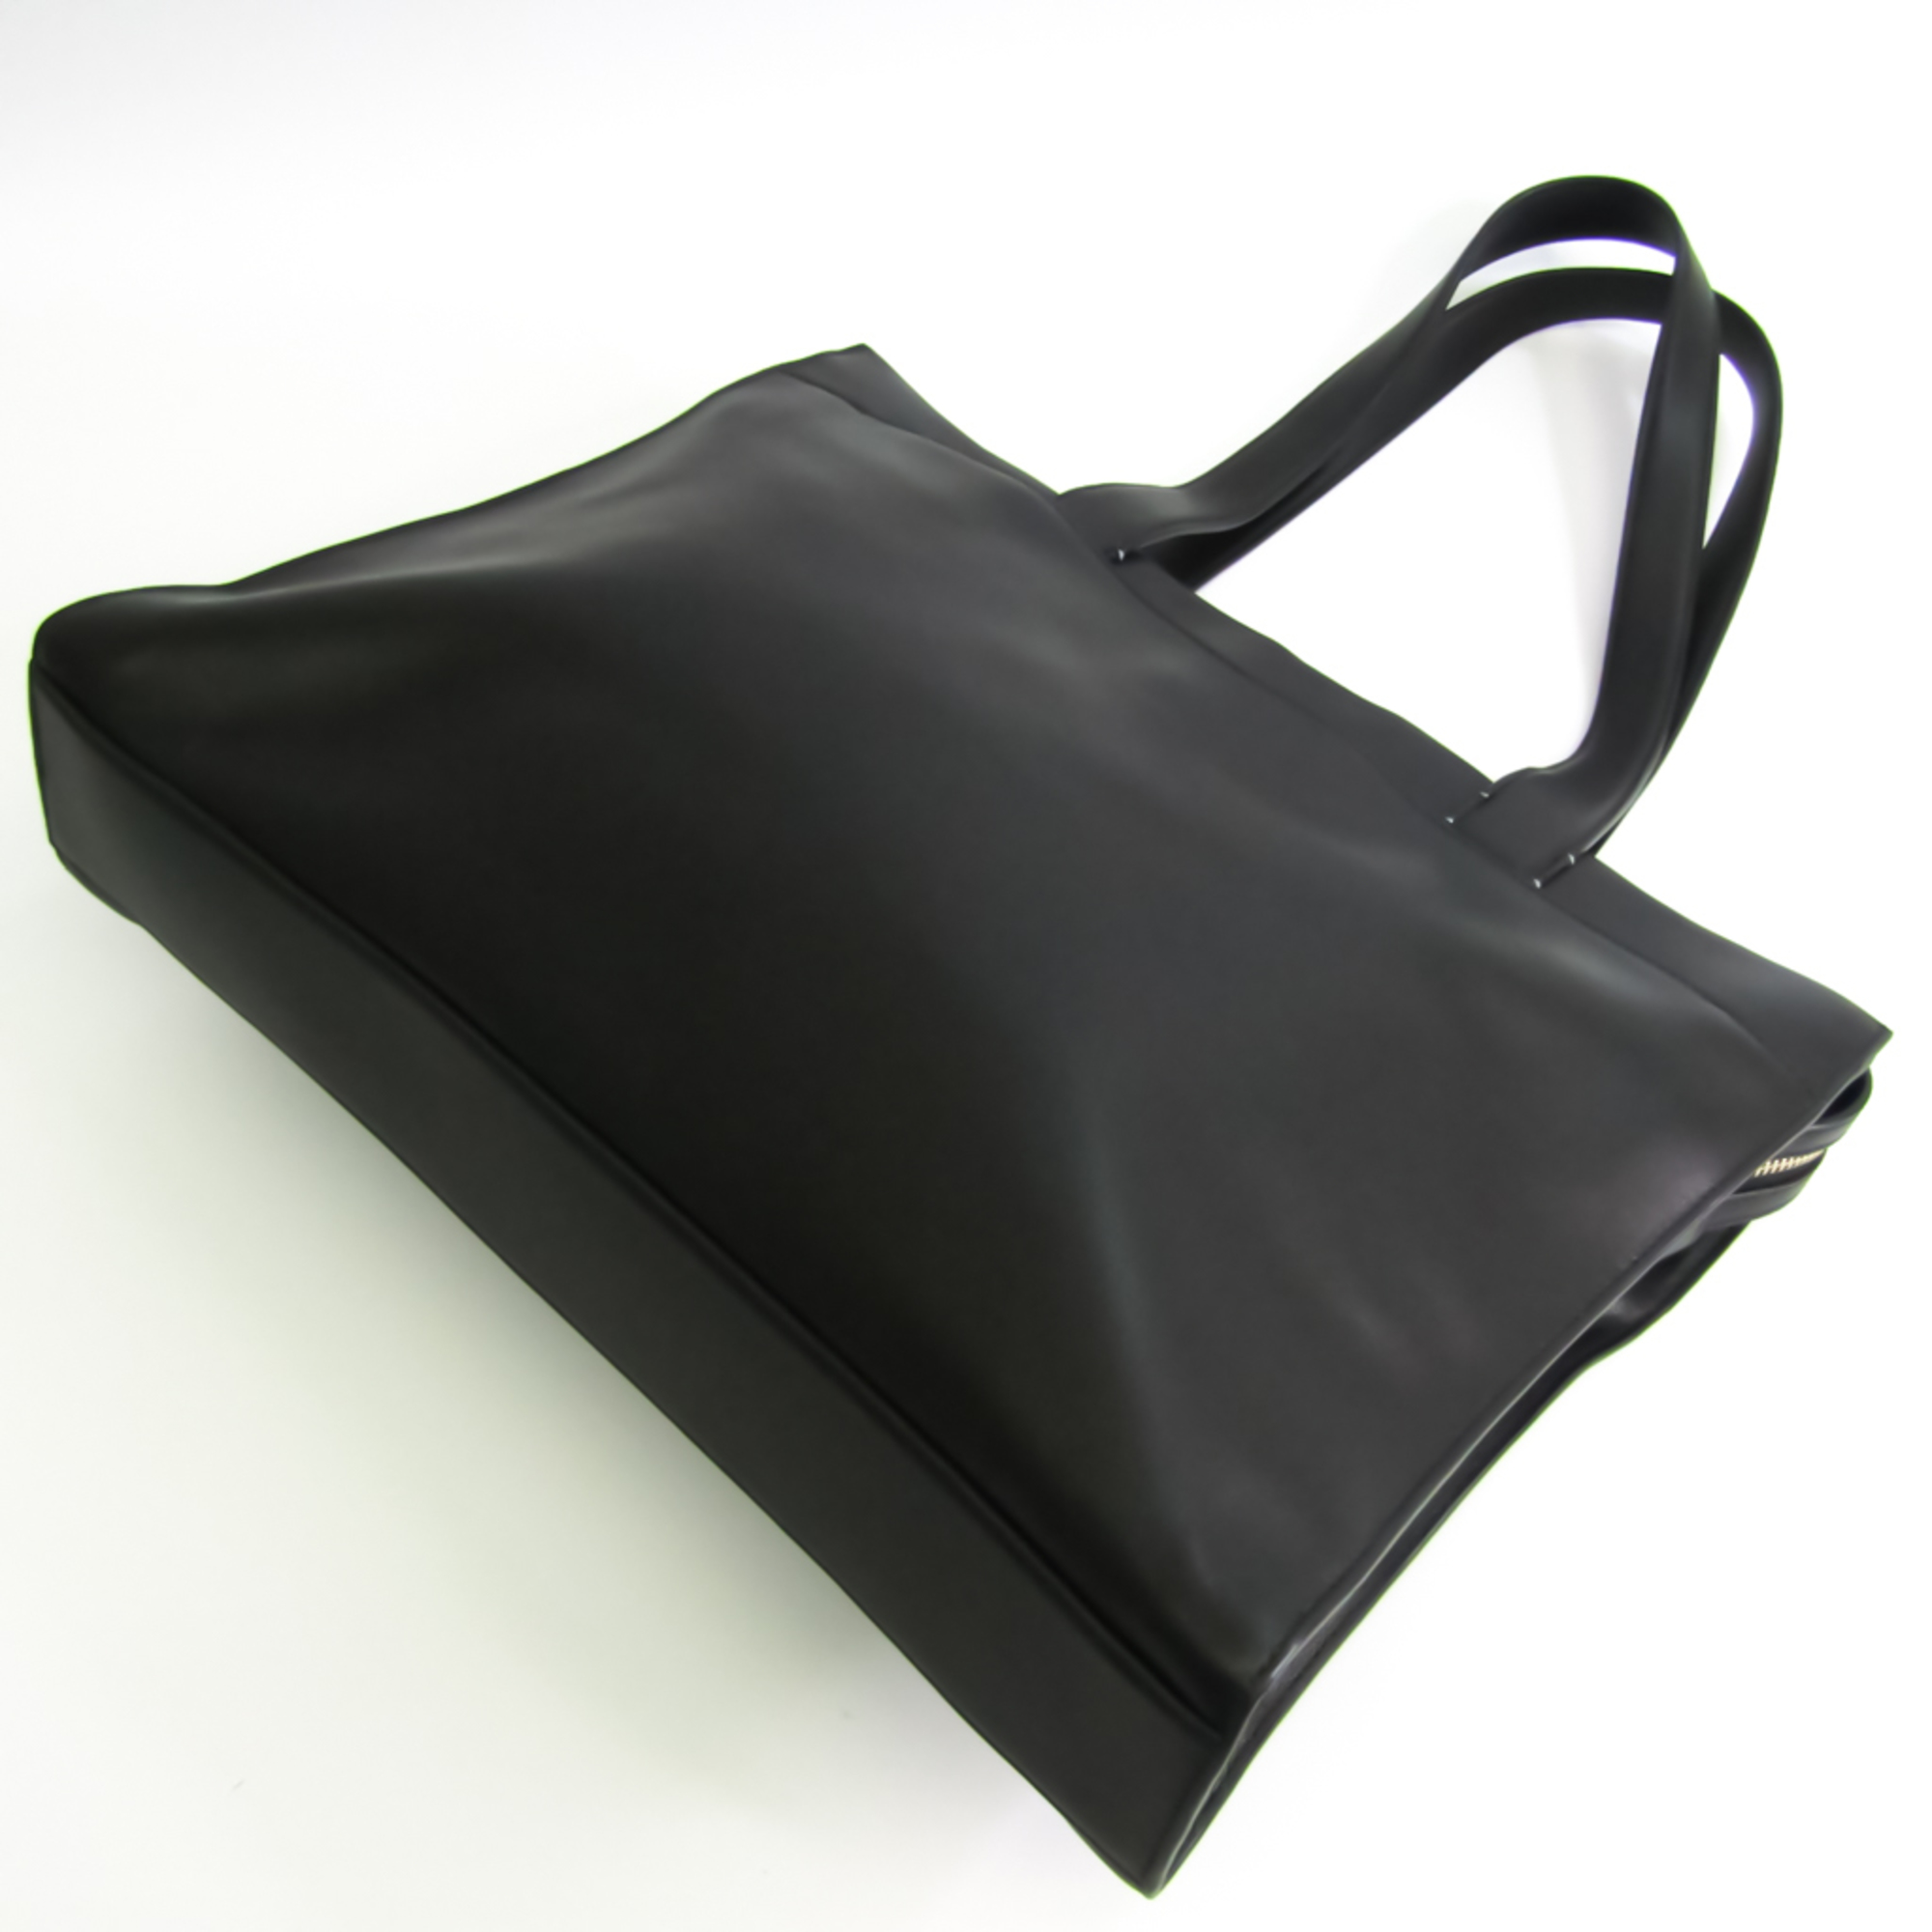 Paul Smith Women's Leather Shoulder Bag Black,Dark Blue